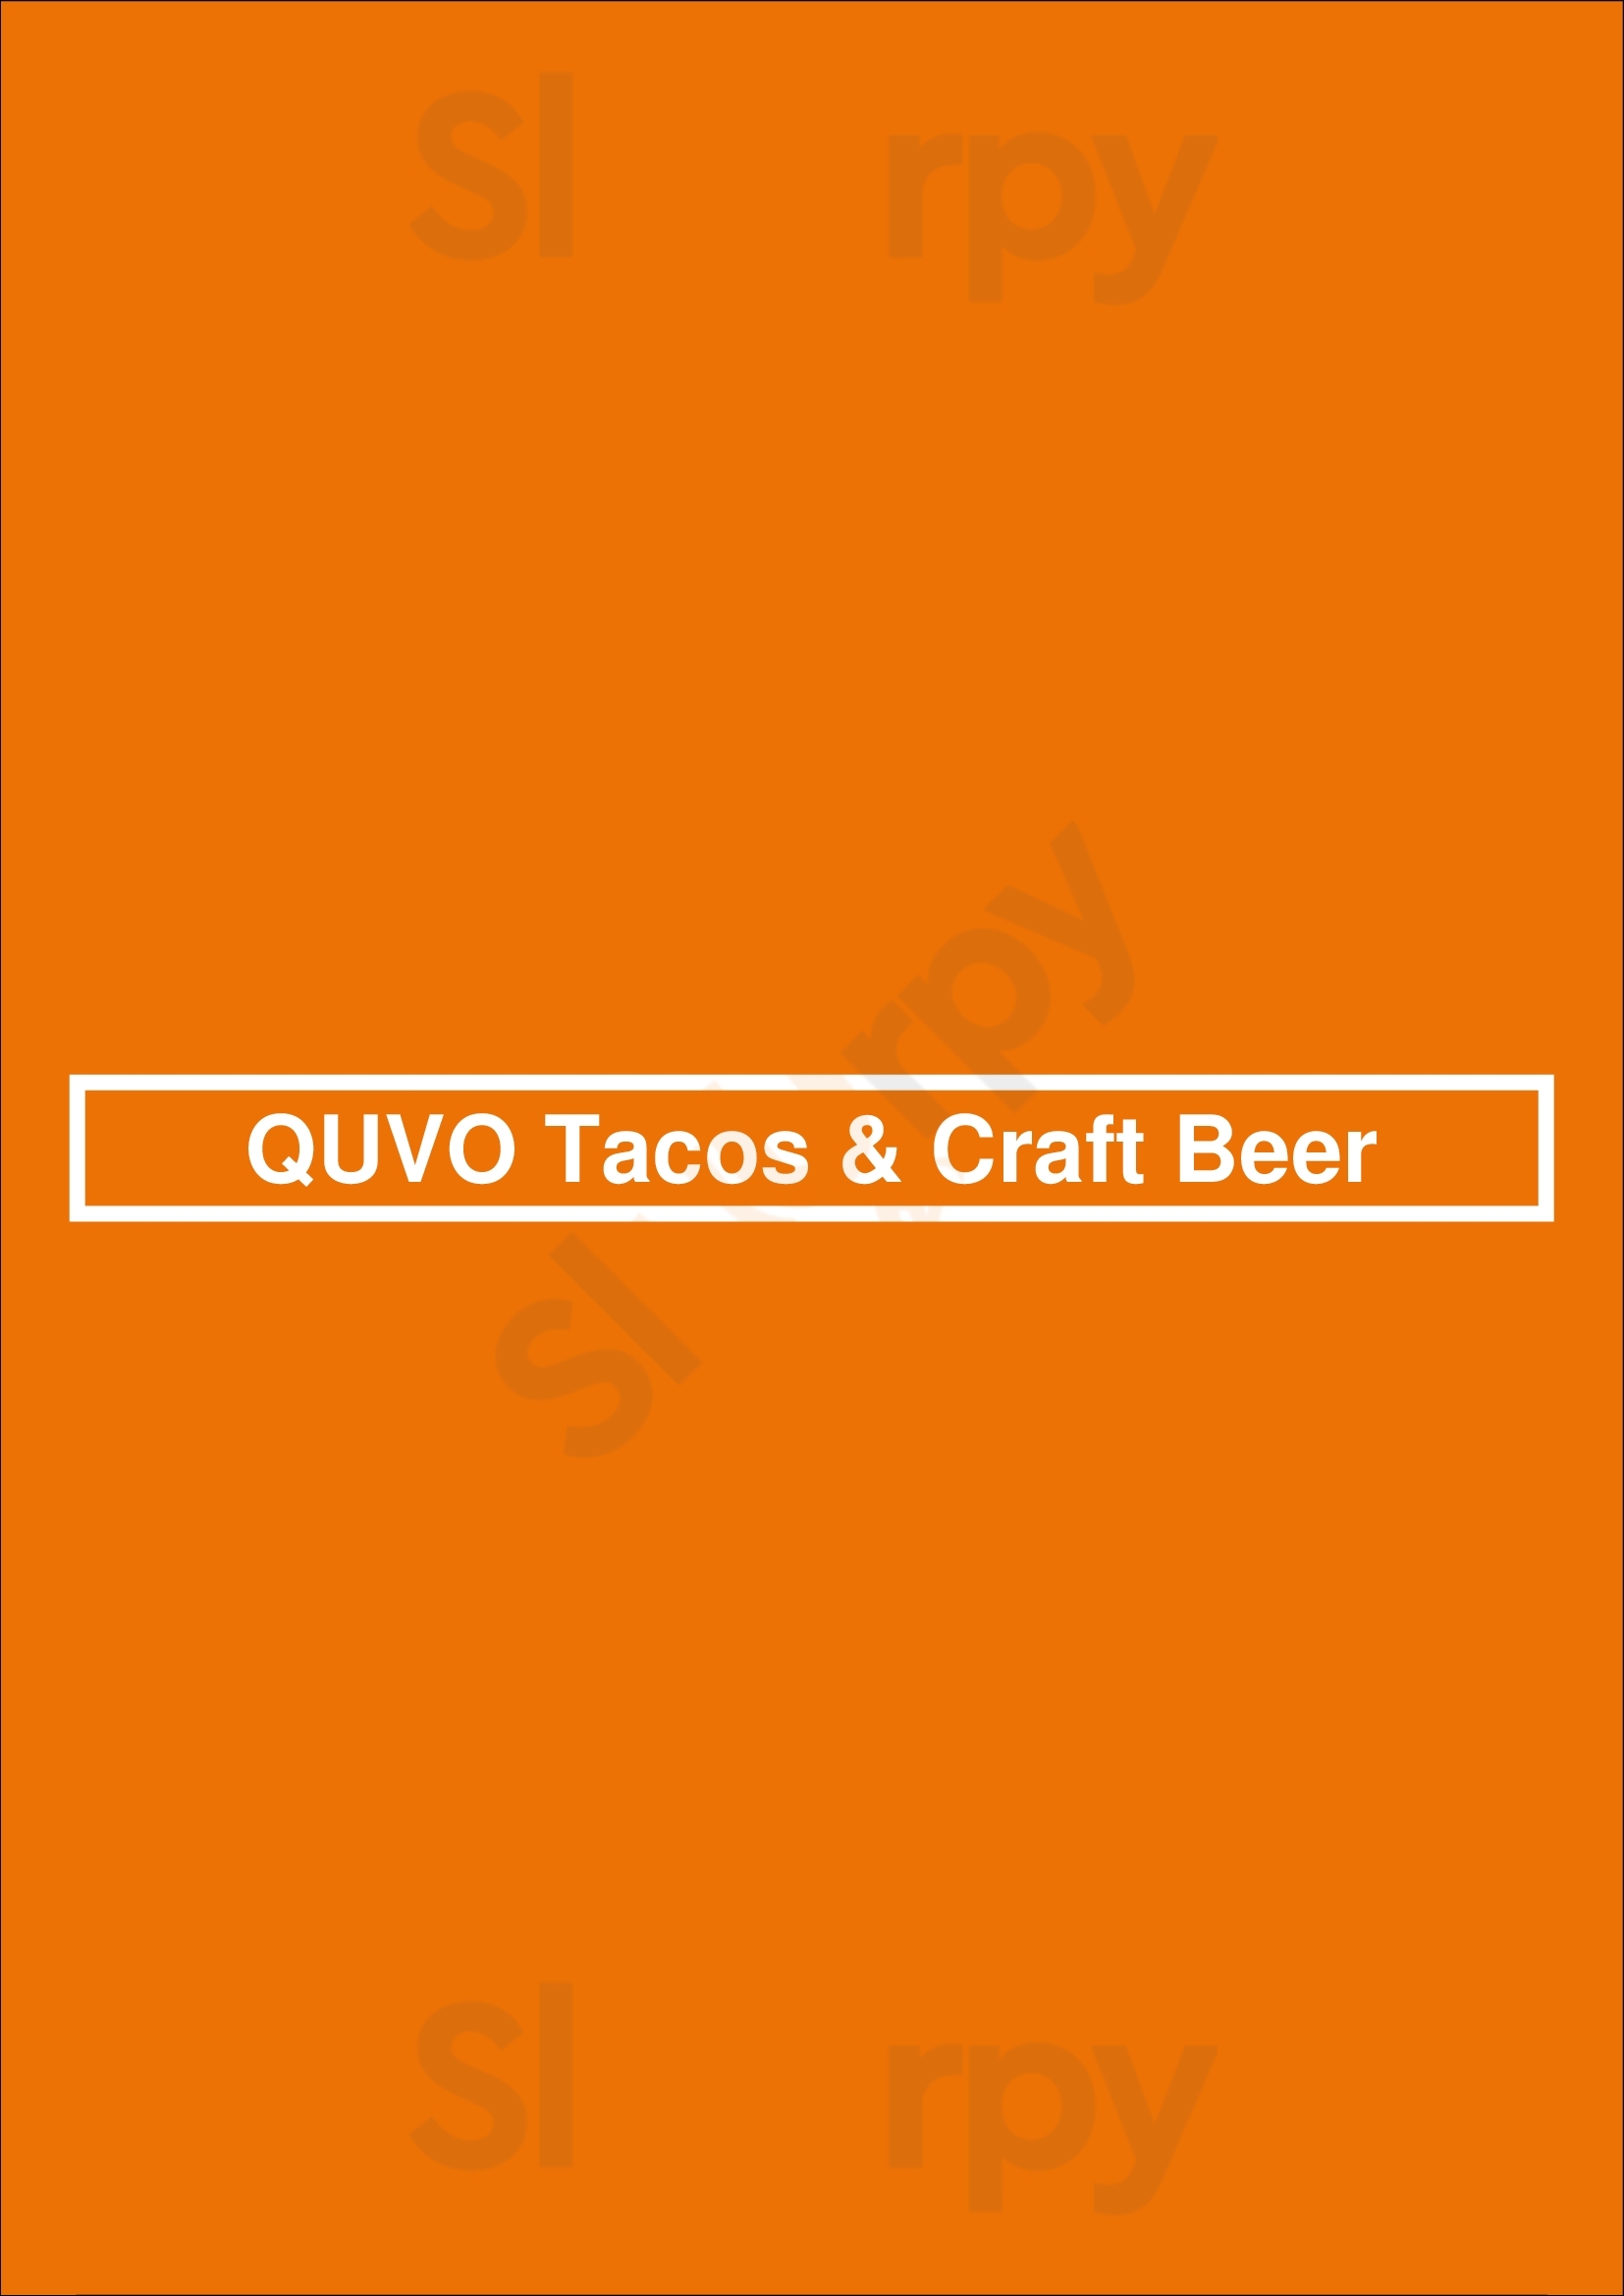 Quvo Tacos And Craft Beer Fort Lauderdale Menu - 1